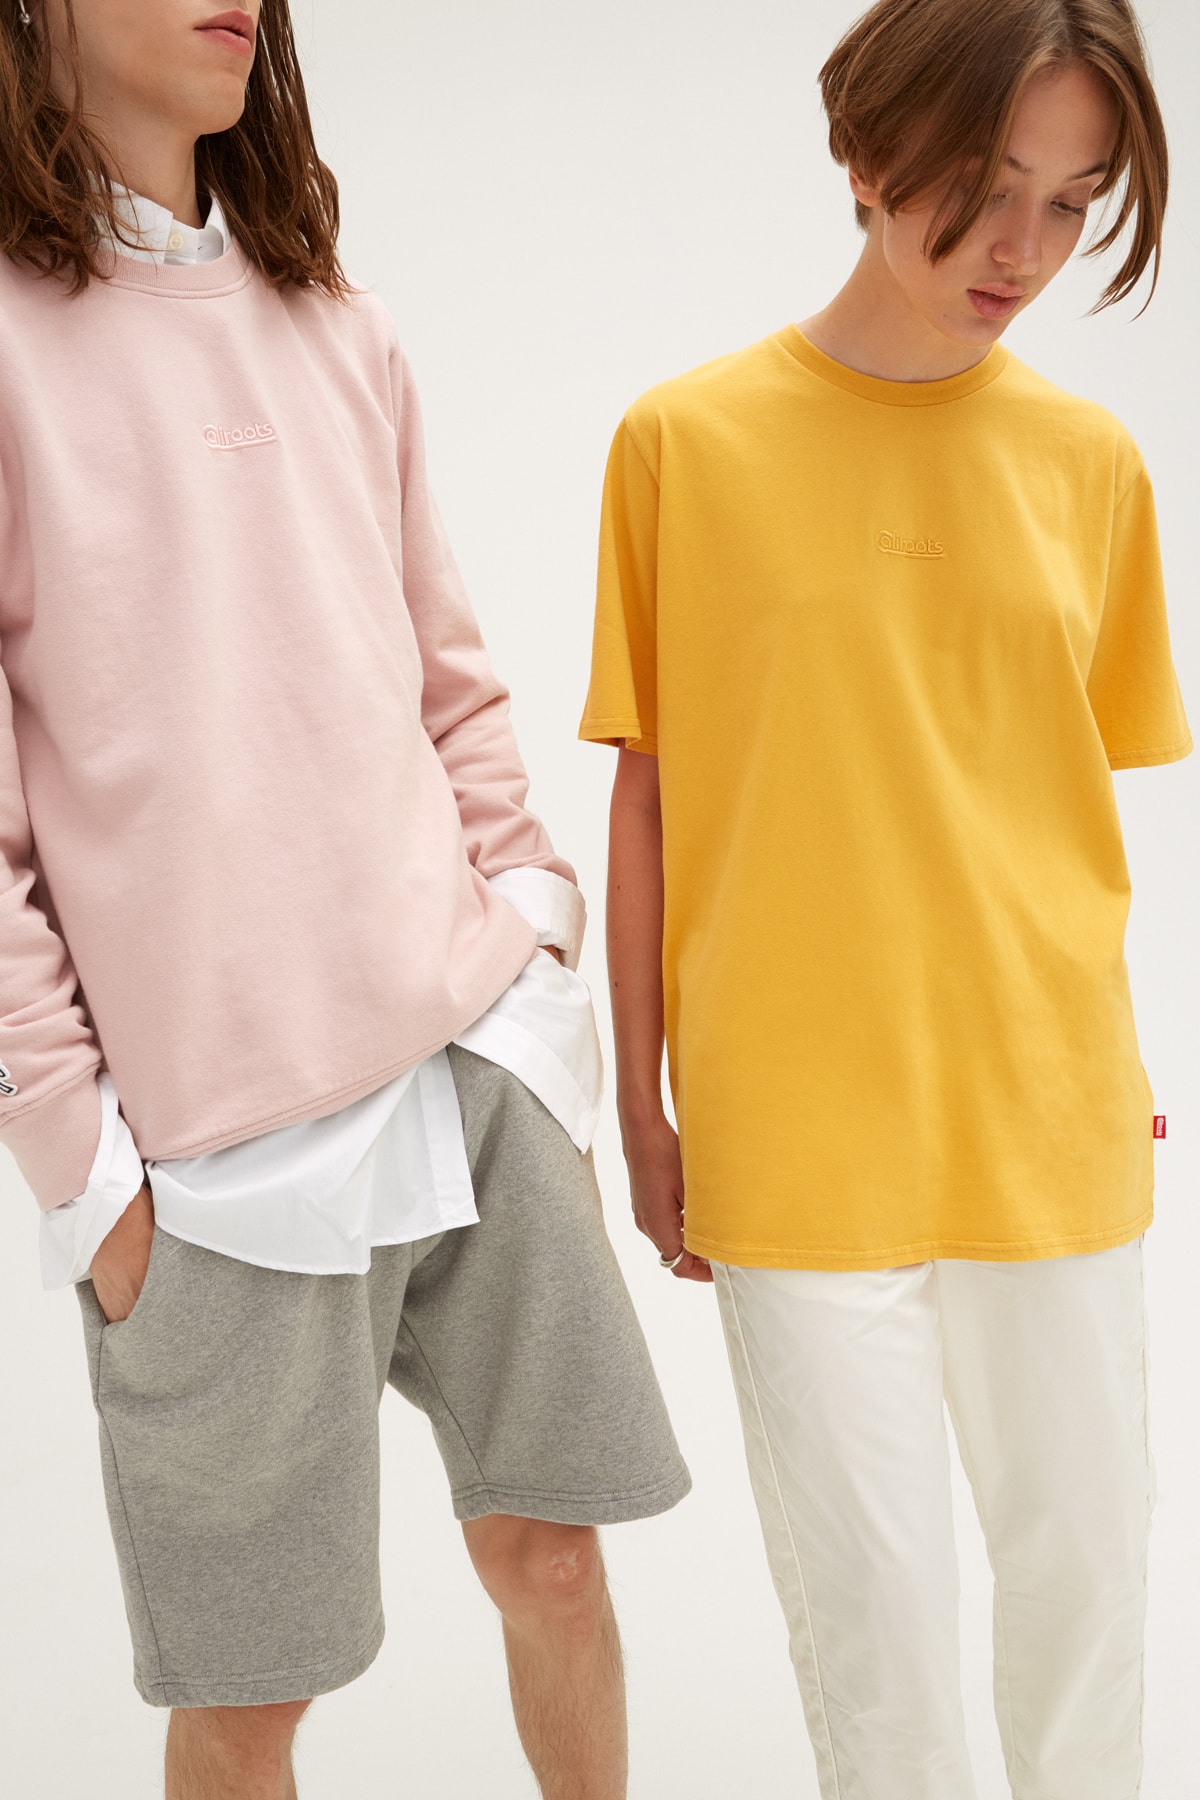 Caliroots Essentials Collection Drop Spring Summer 2019 sweater tee shirt shorts june 14 2018 release date info launch lookbook